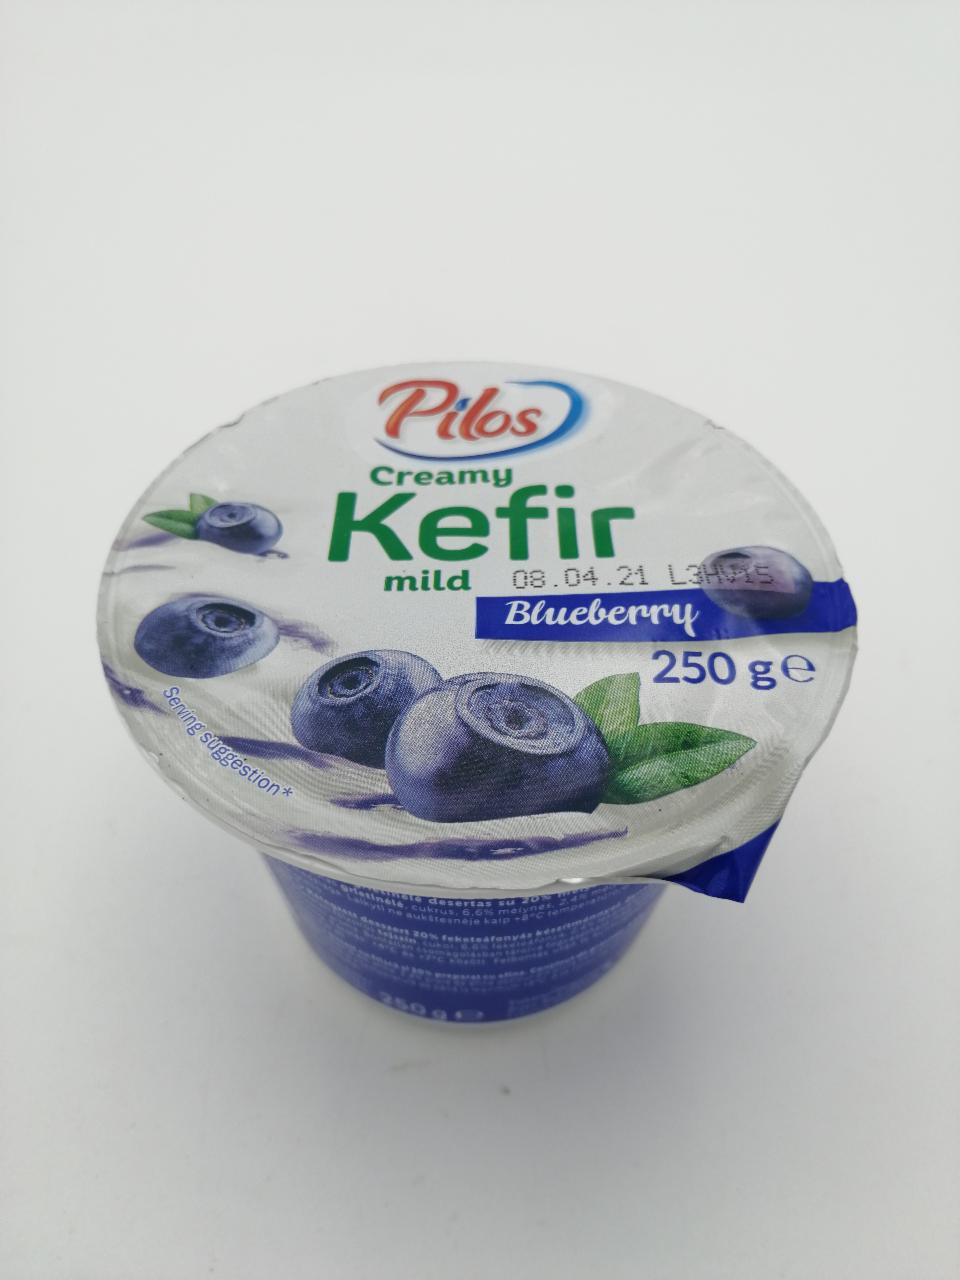 Fotografie - Kefir Creamy mild Blueberry Pilos